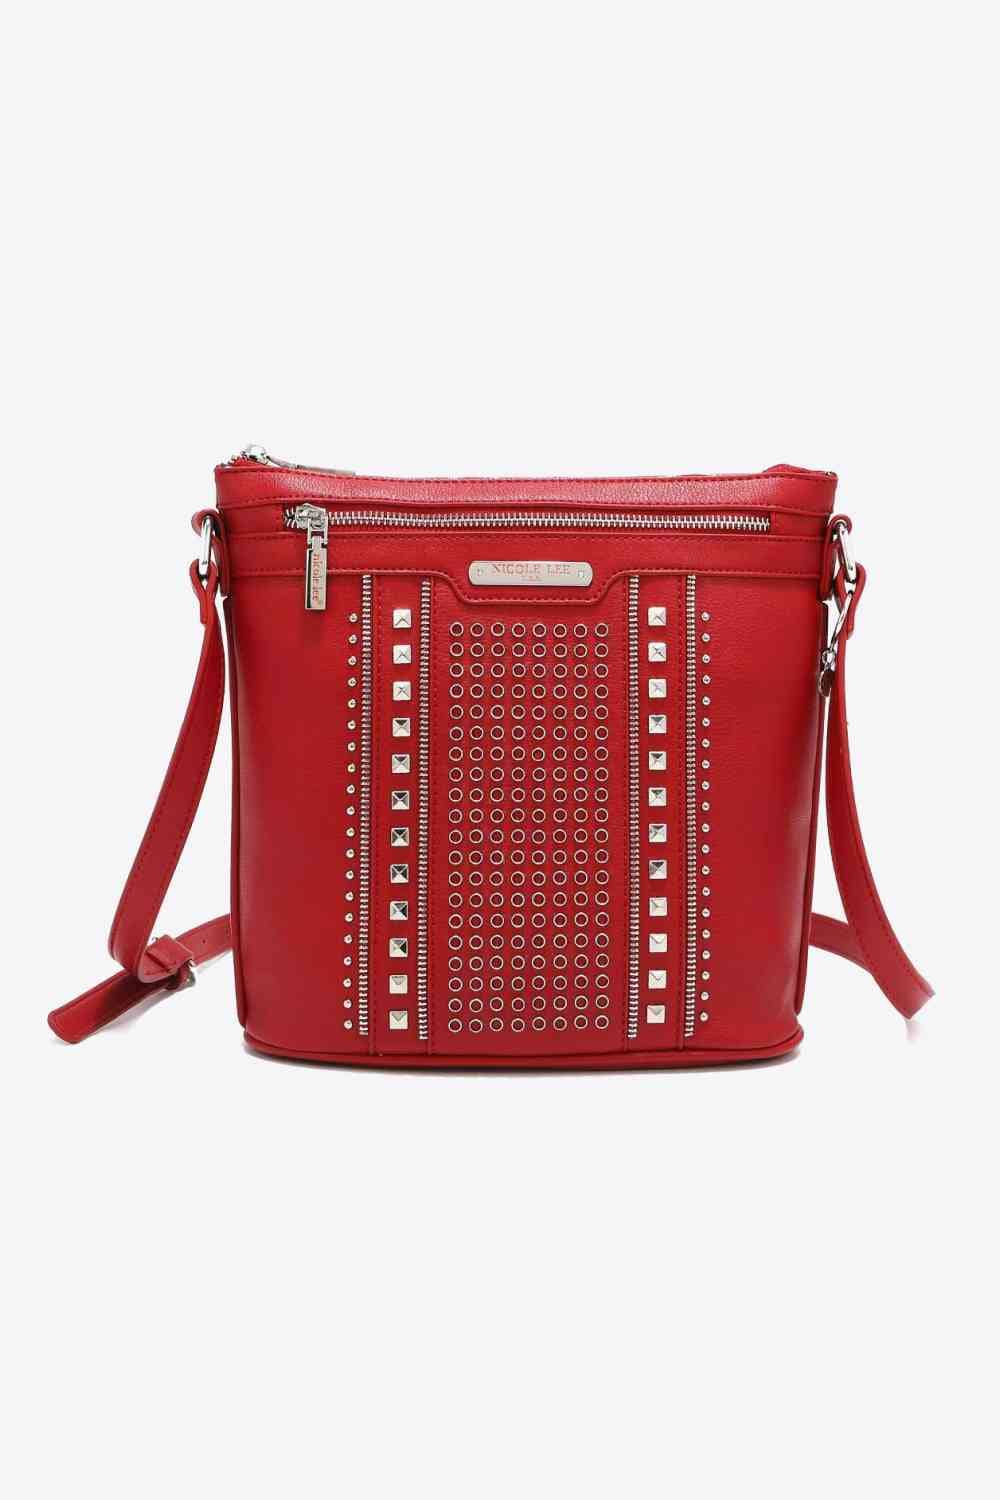 Nicole Lee USA Love Handbag Red / One Size